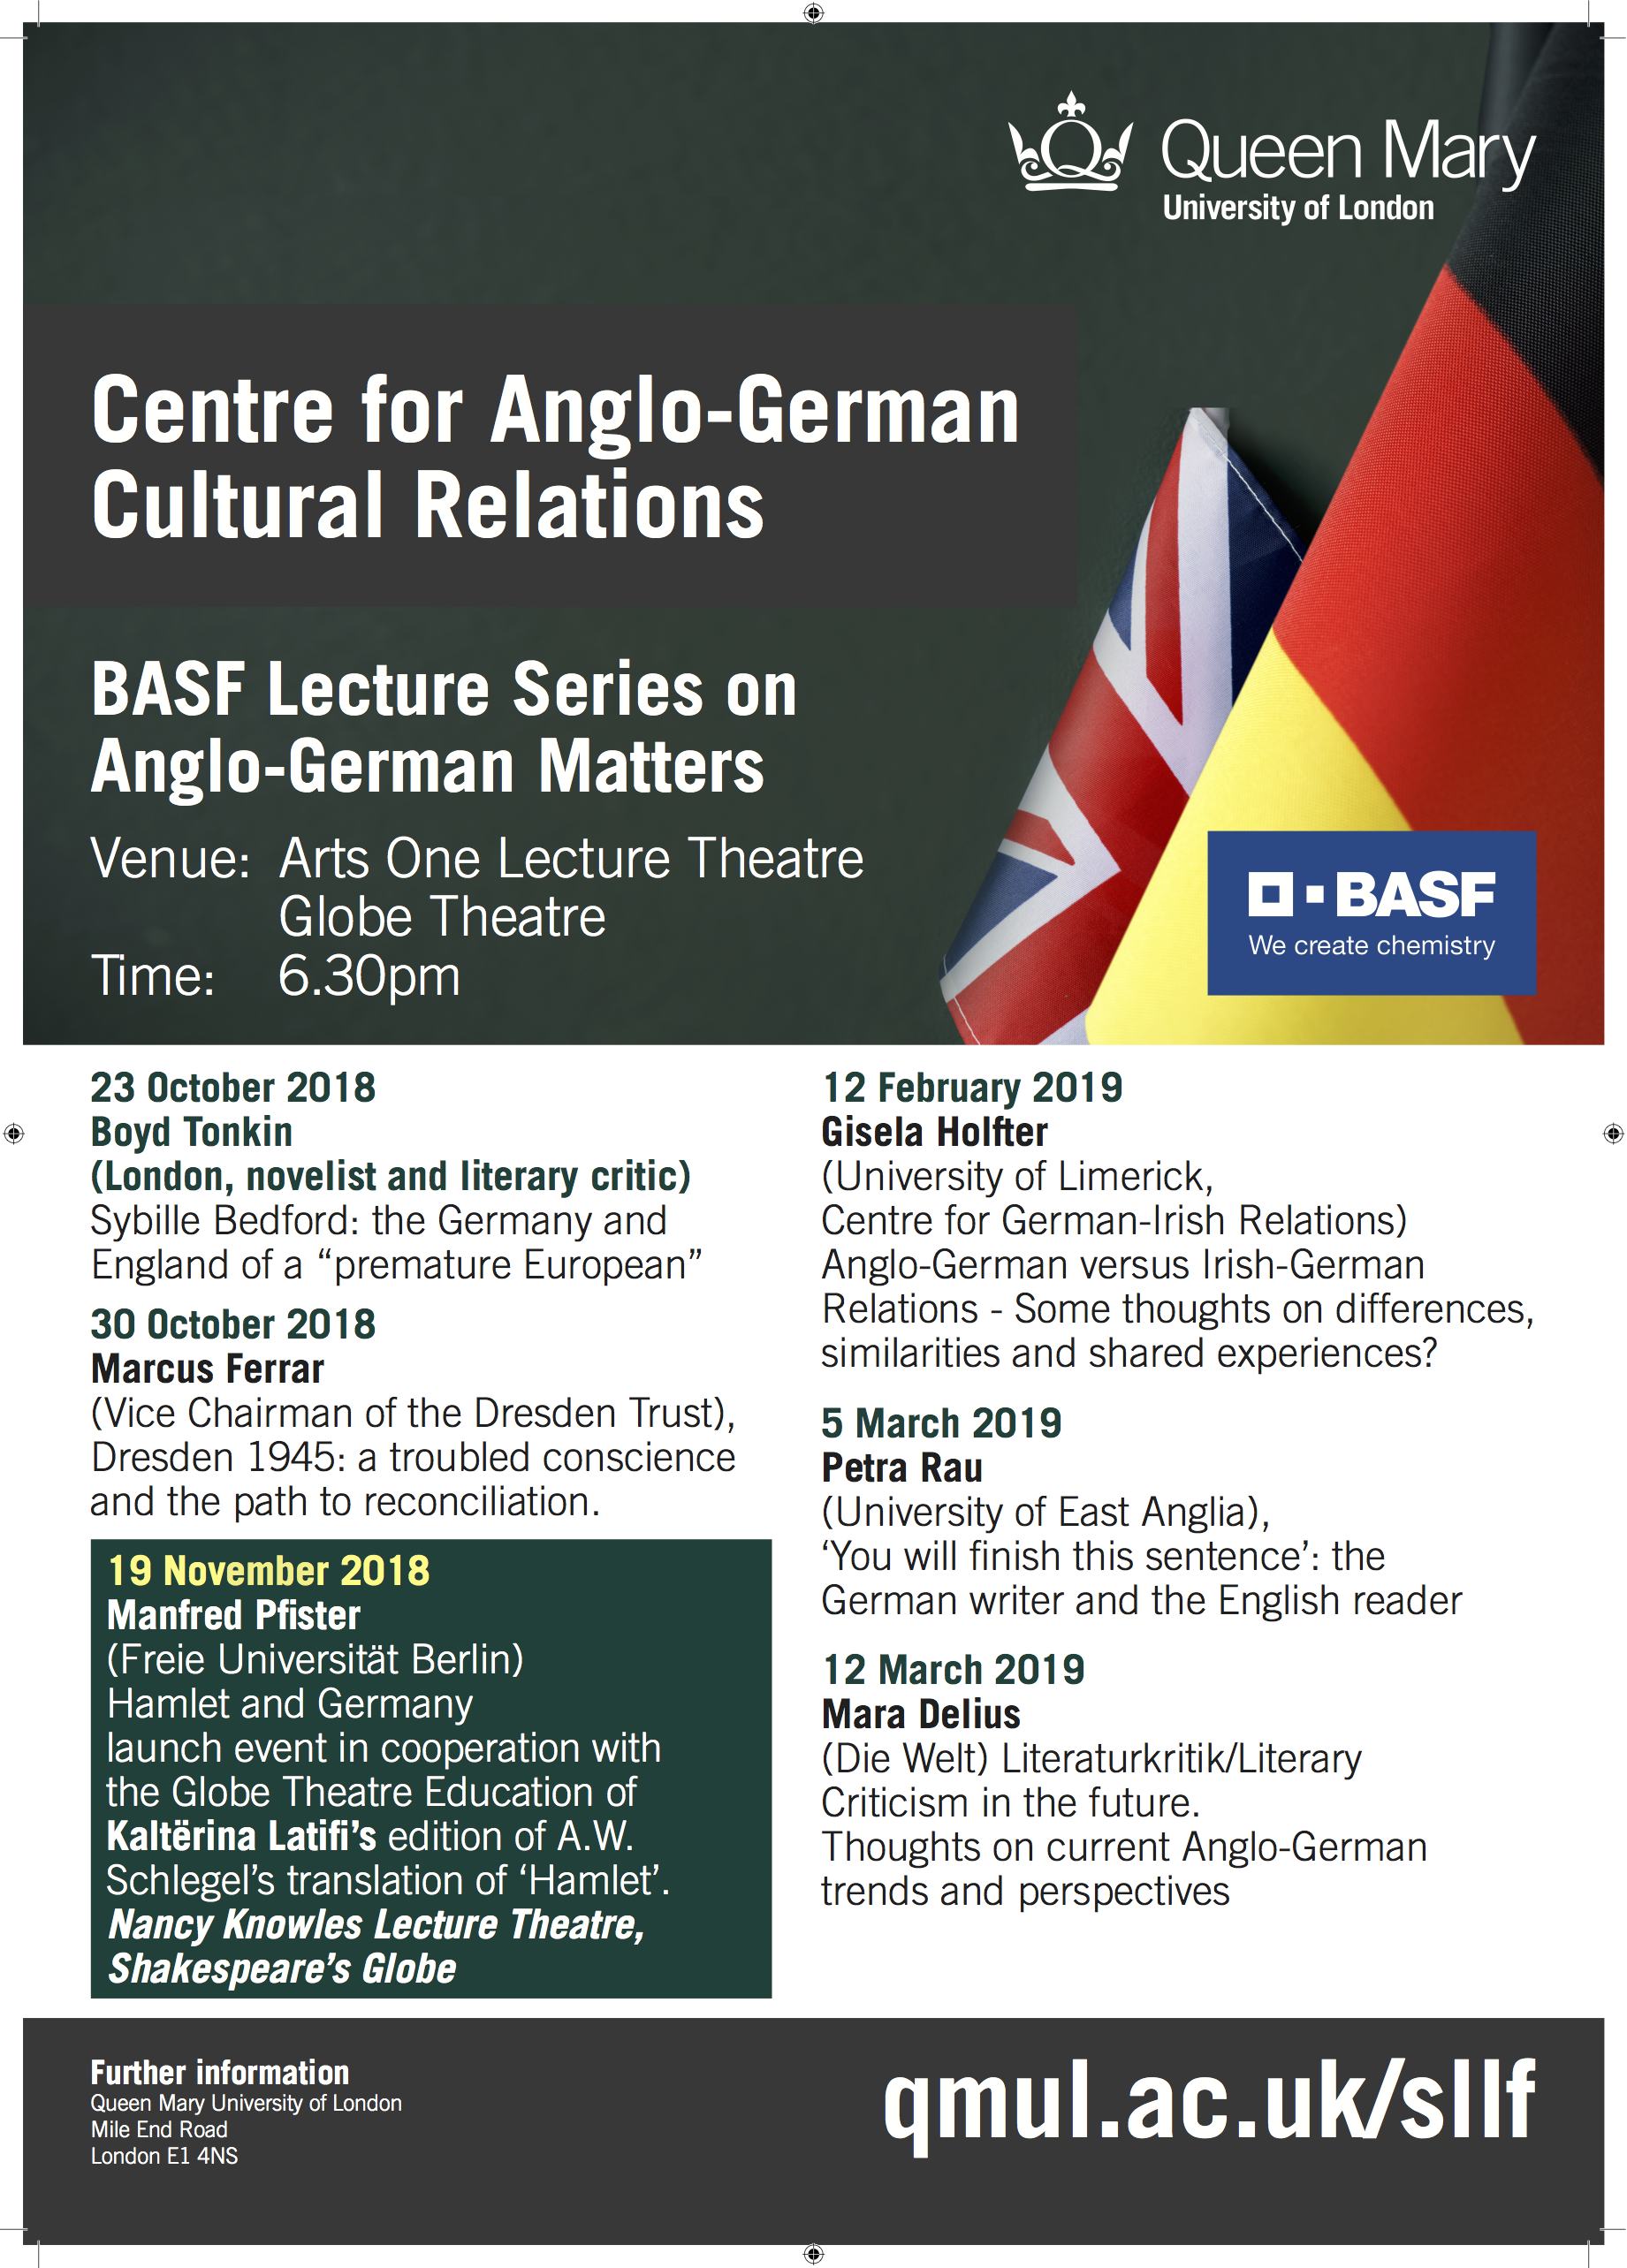 BASF Lecture Series 2018-19